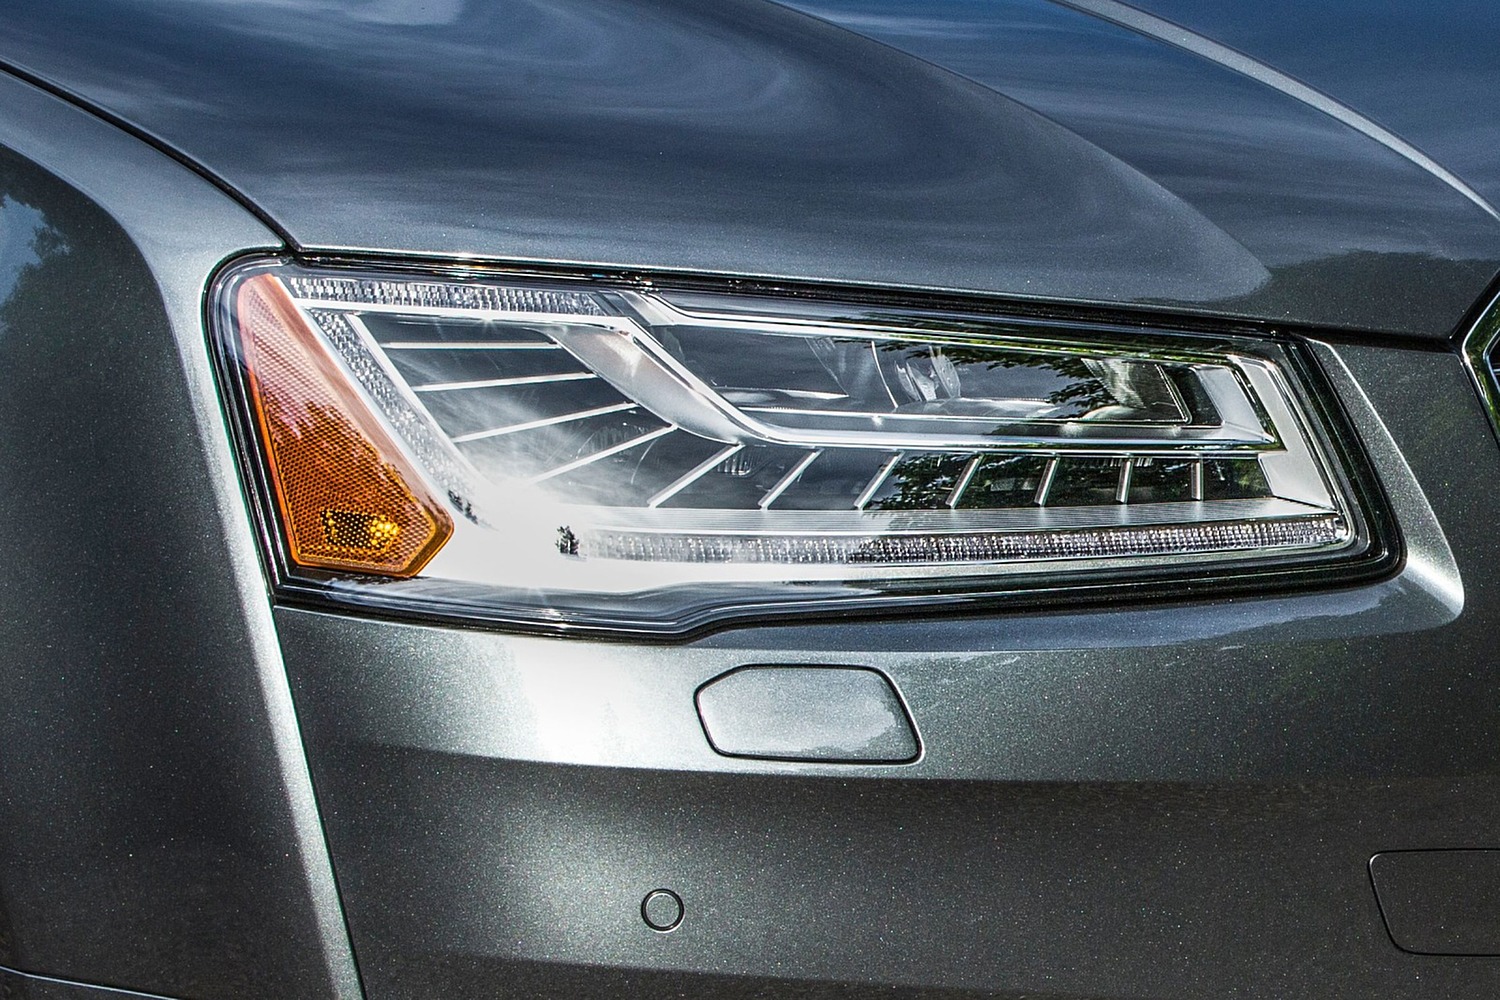 Audi S8 plus quattro Sedan Headlamp Detail (2017 model year shown)